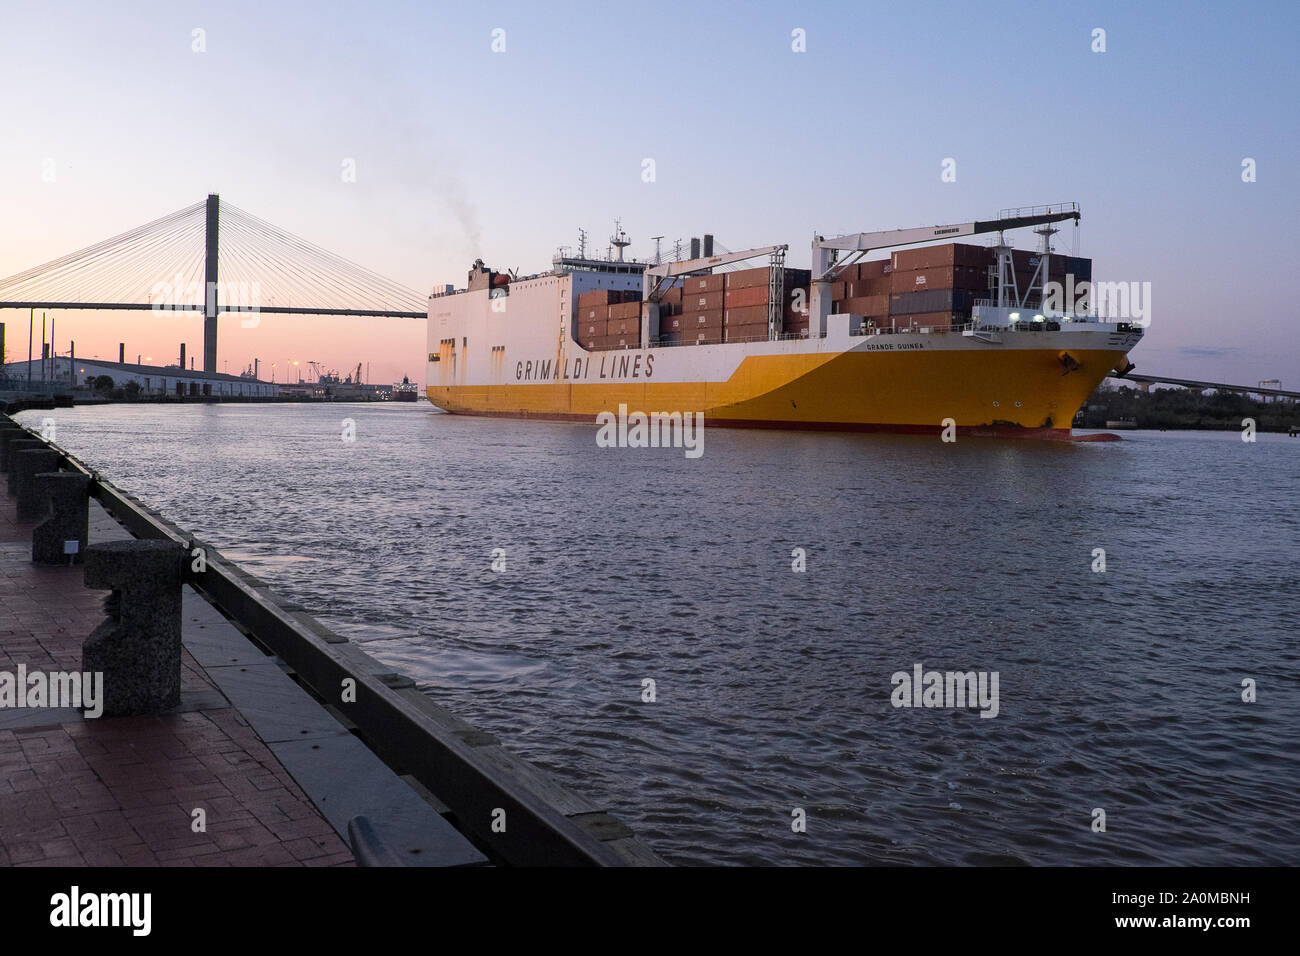 A large ocean vessel departs from the port of Savannah, GA as it navigates the Savannah River towards the Atlantic. Stock Photo